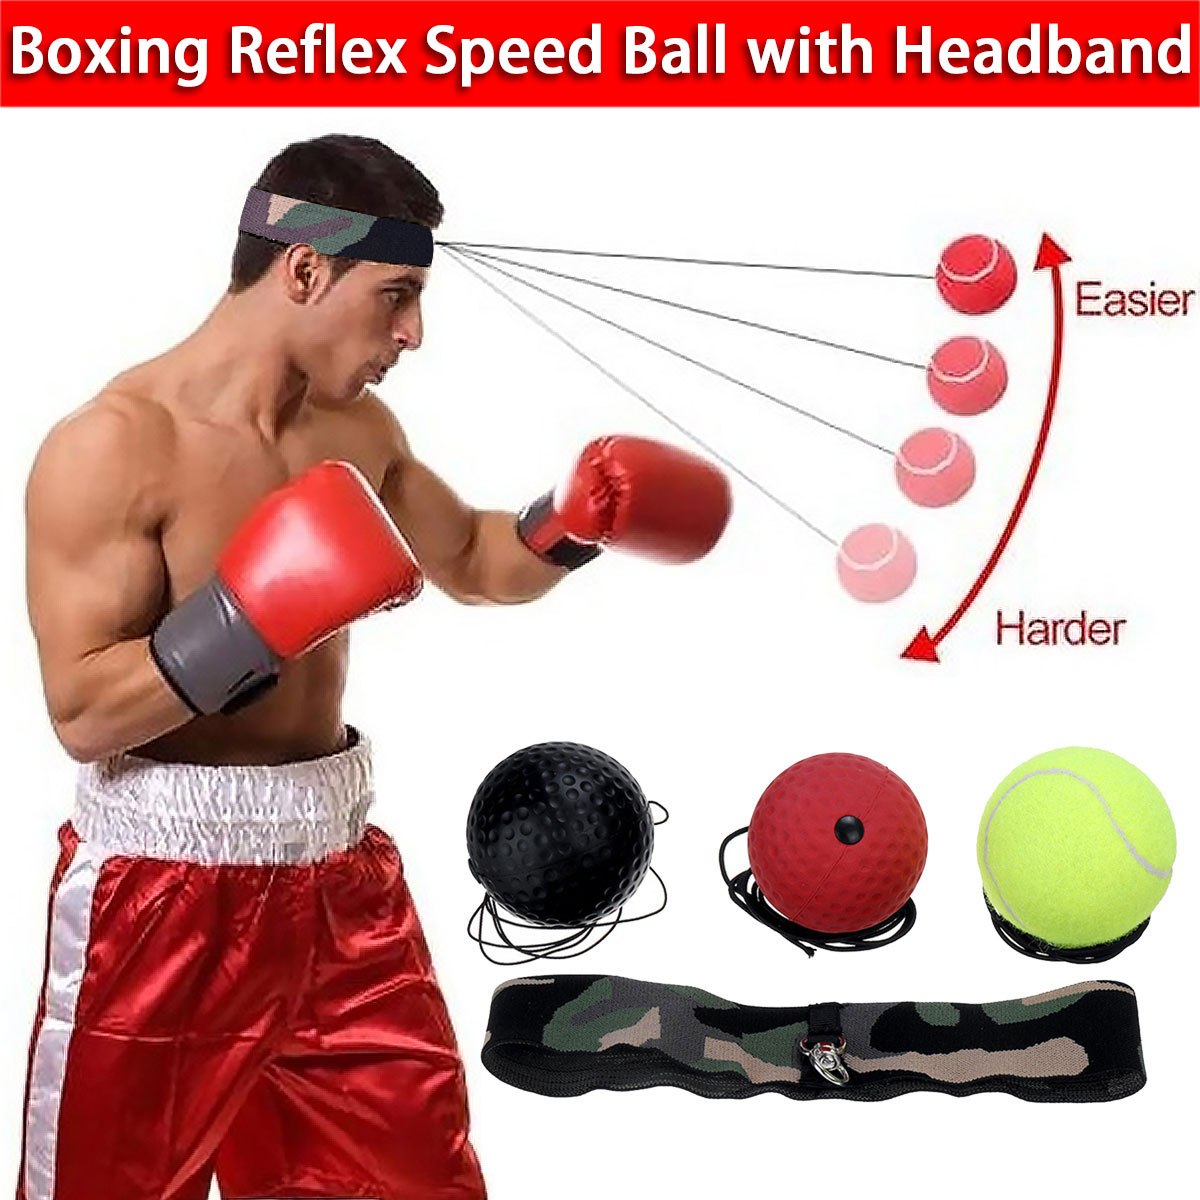 MMA Boxing FightBall With Head Band For ReflexSpeed TrainingPunching Exercise UK 